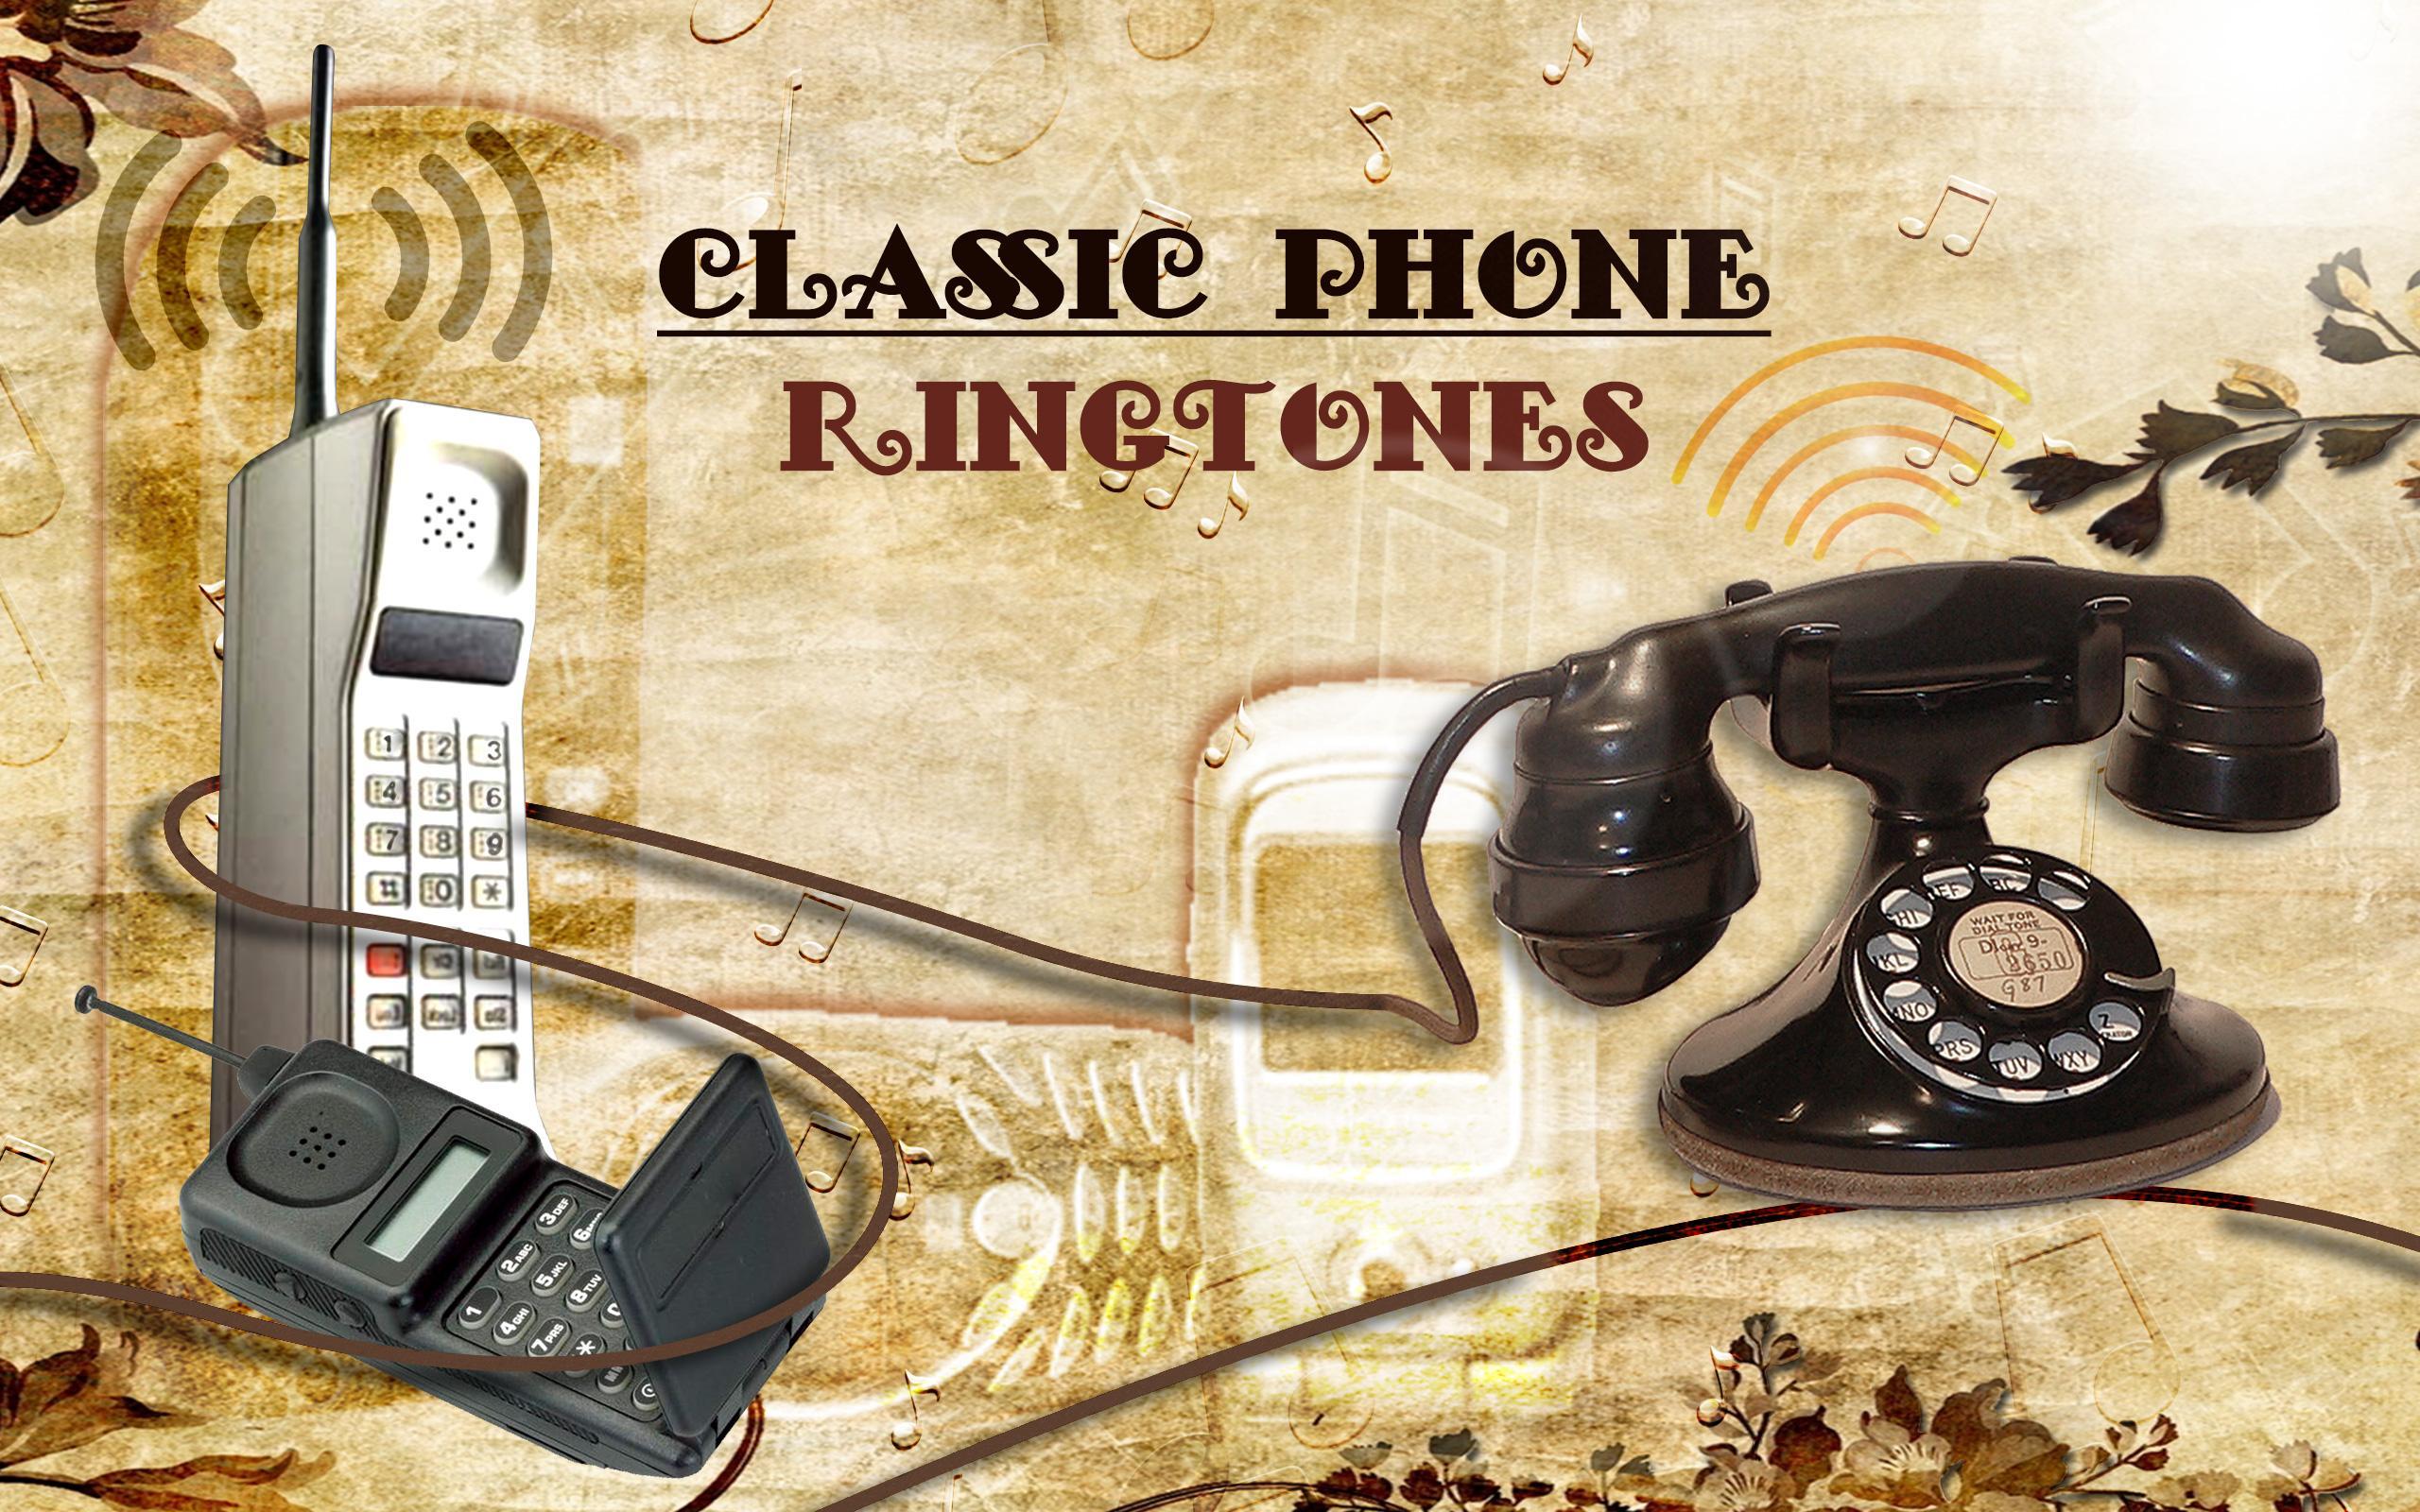 Suui ringtone. Заставка телефонного звонка. Телефон для звонка. Заставки на старые мобильники. Фон на звонок.